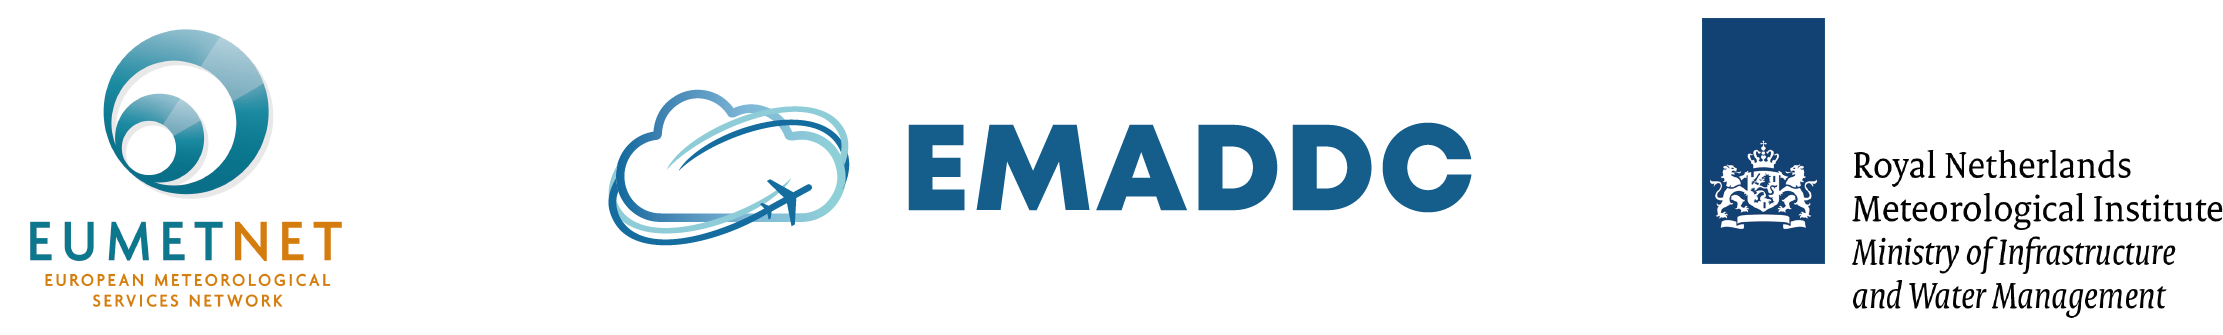 EMADDC logo